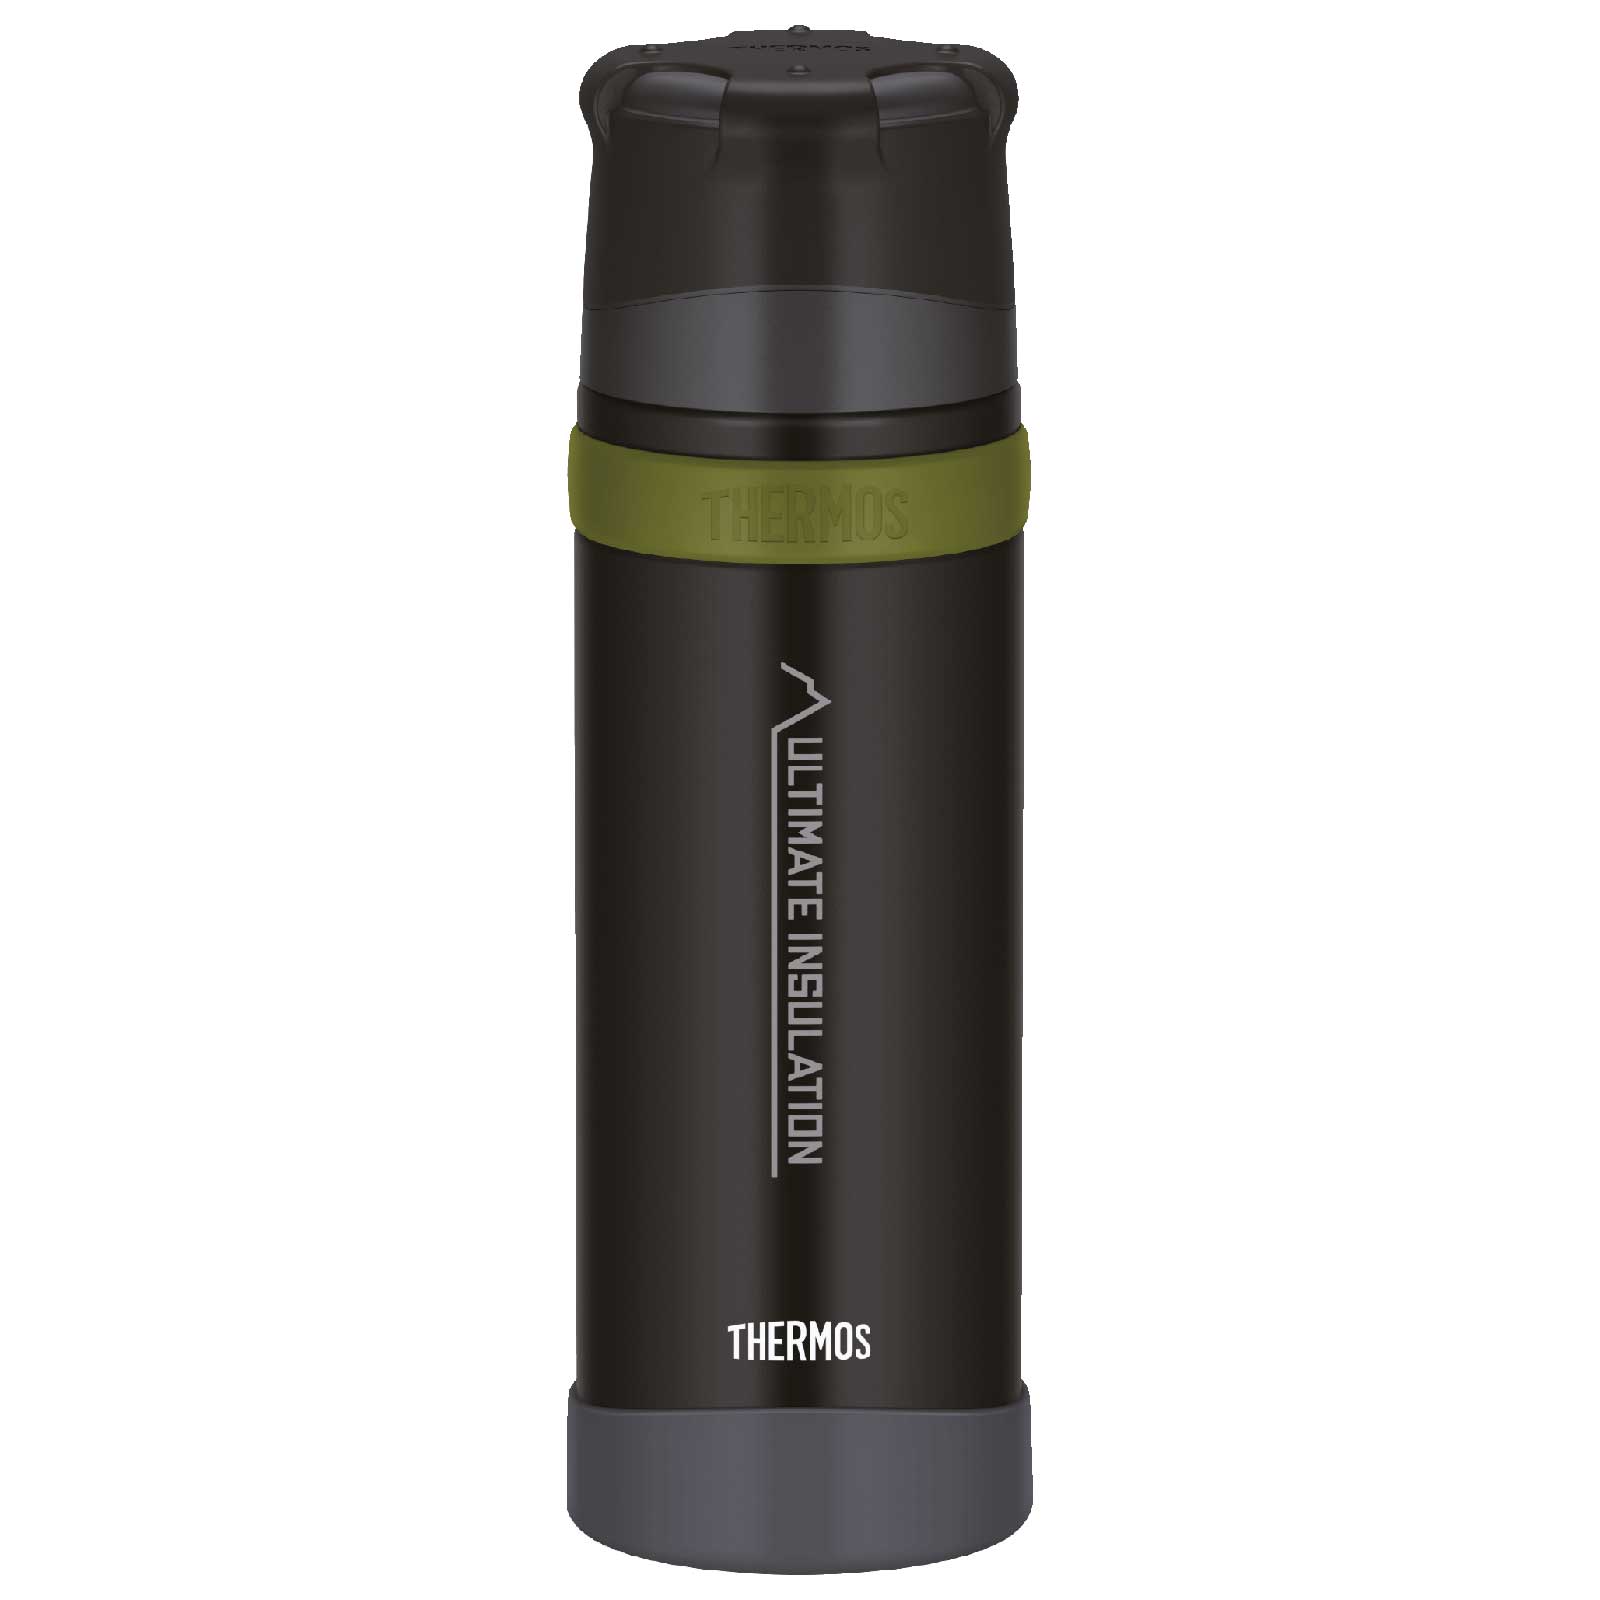 Productfoto van THERMOS® Mountain Beverage Bottle 0.75L - charcoal black mat